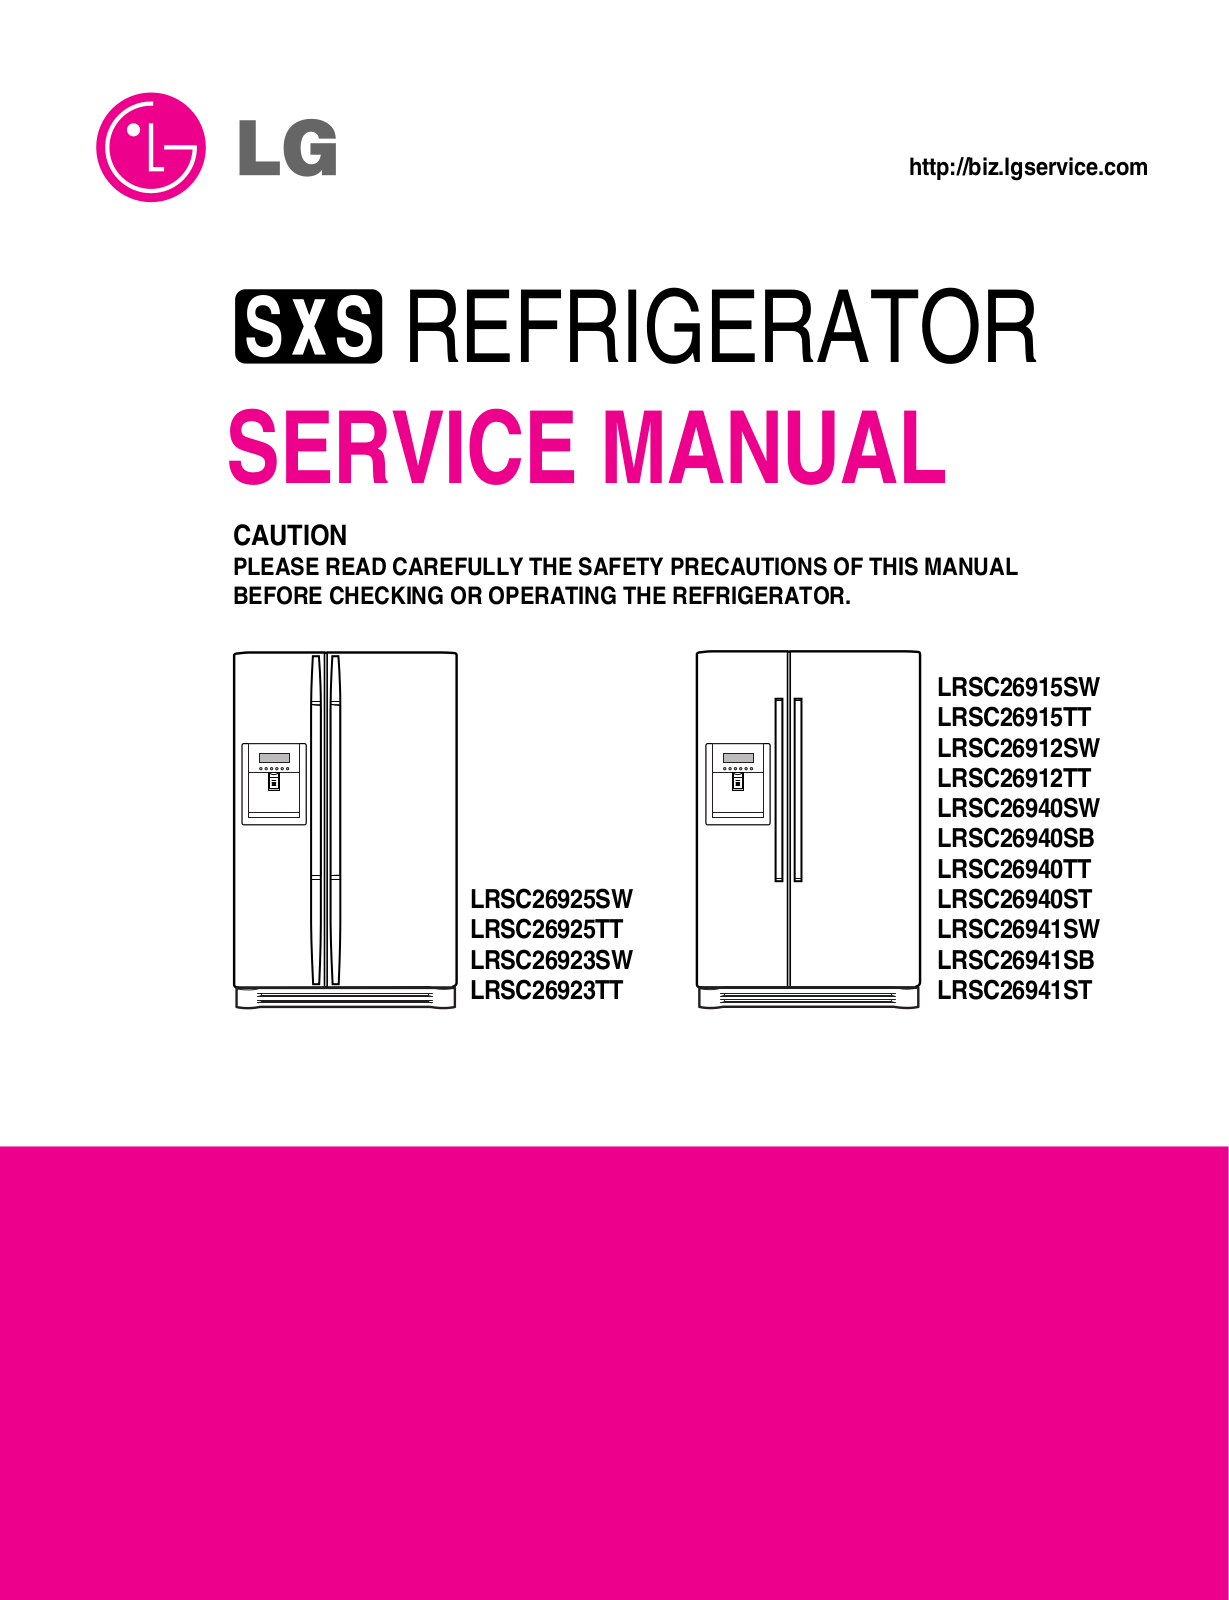 LG LRSC26925SW, LRSC26941xx, LRSC26925TT, LRSC26923SW, LRSC26923TT Service Manual